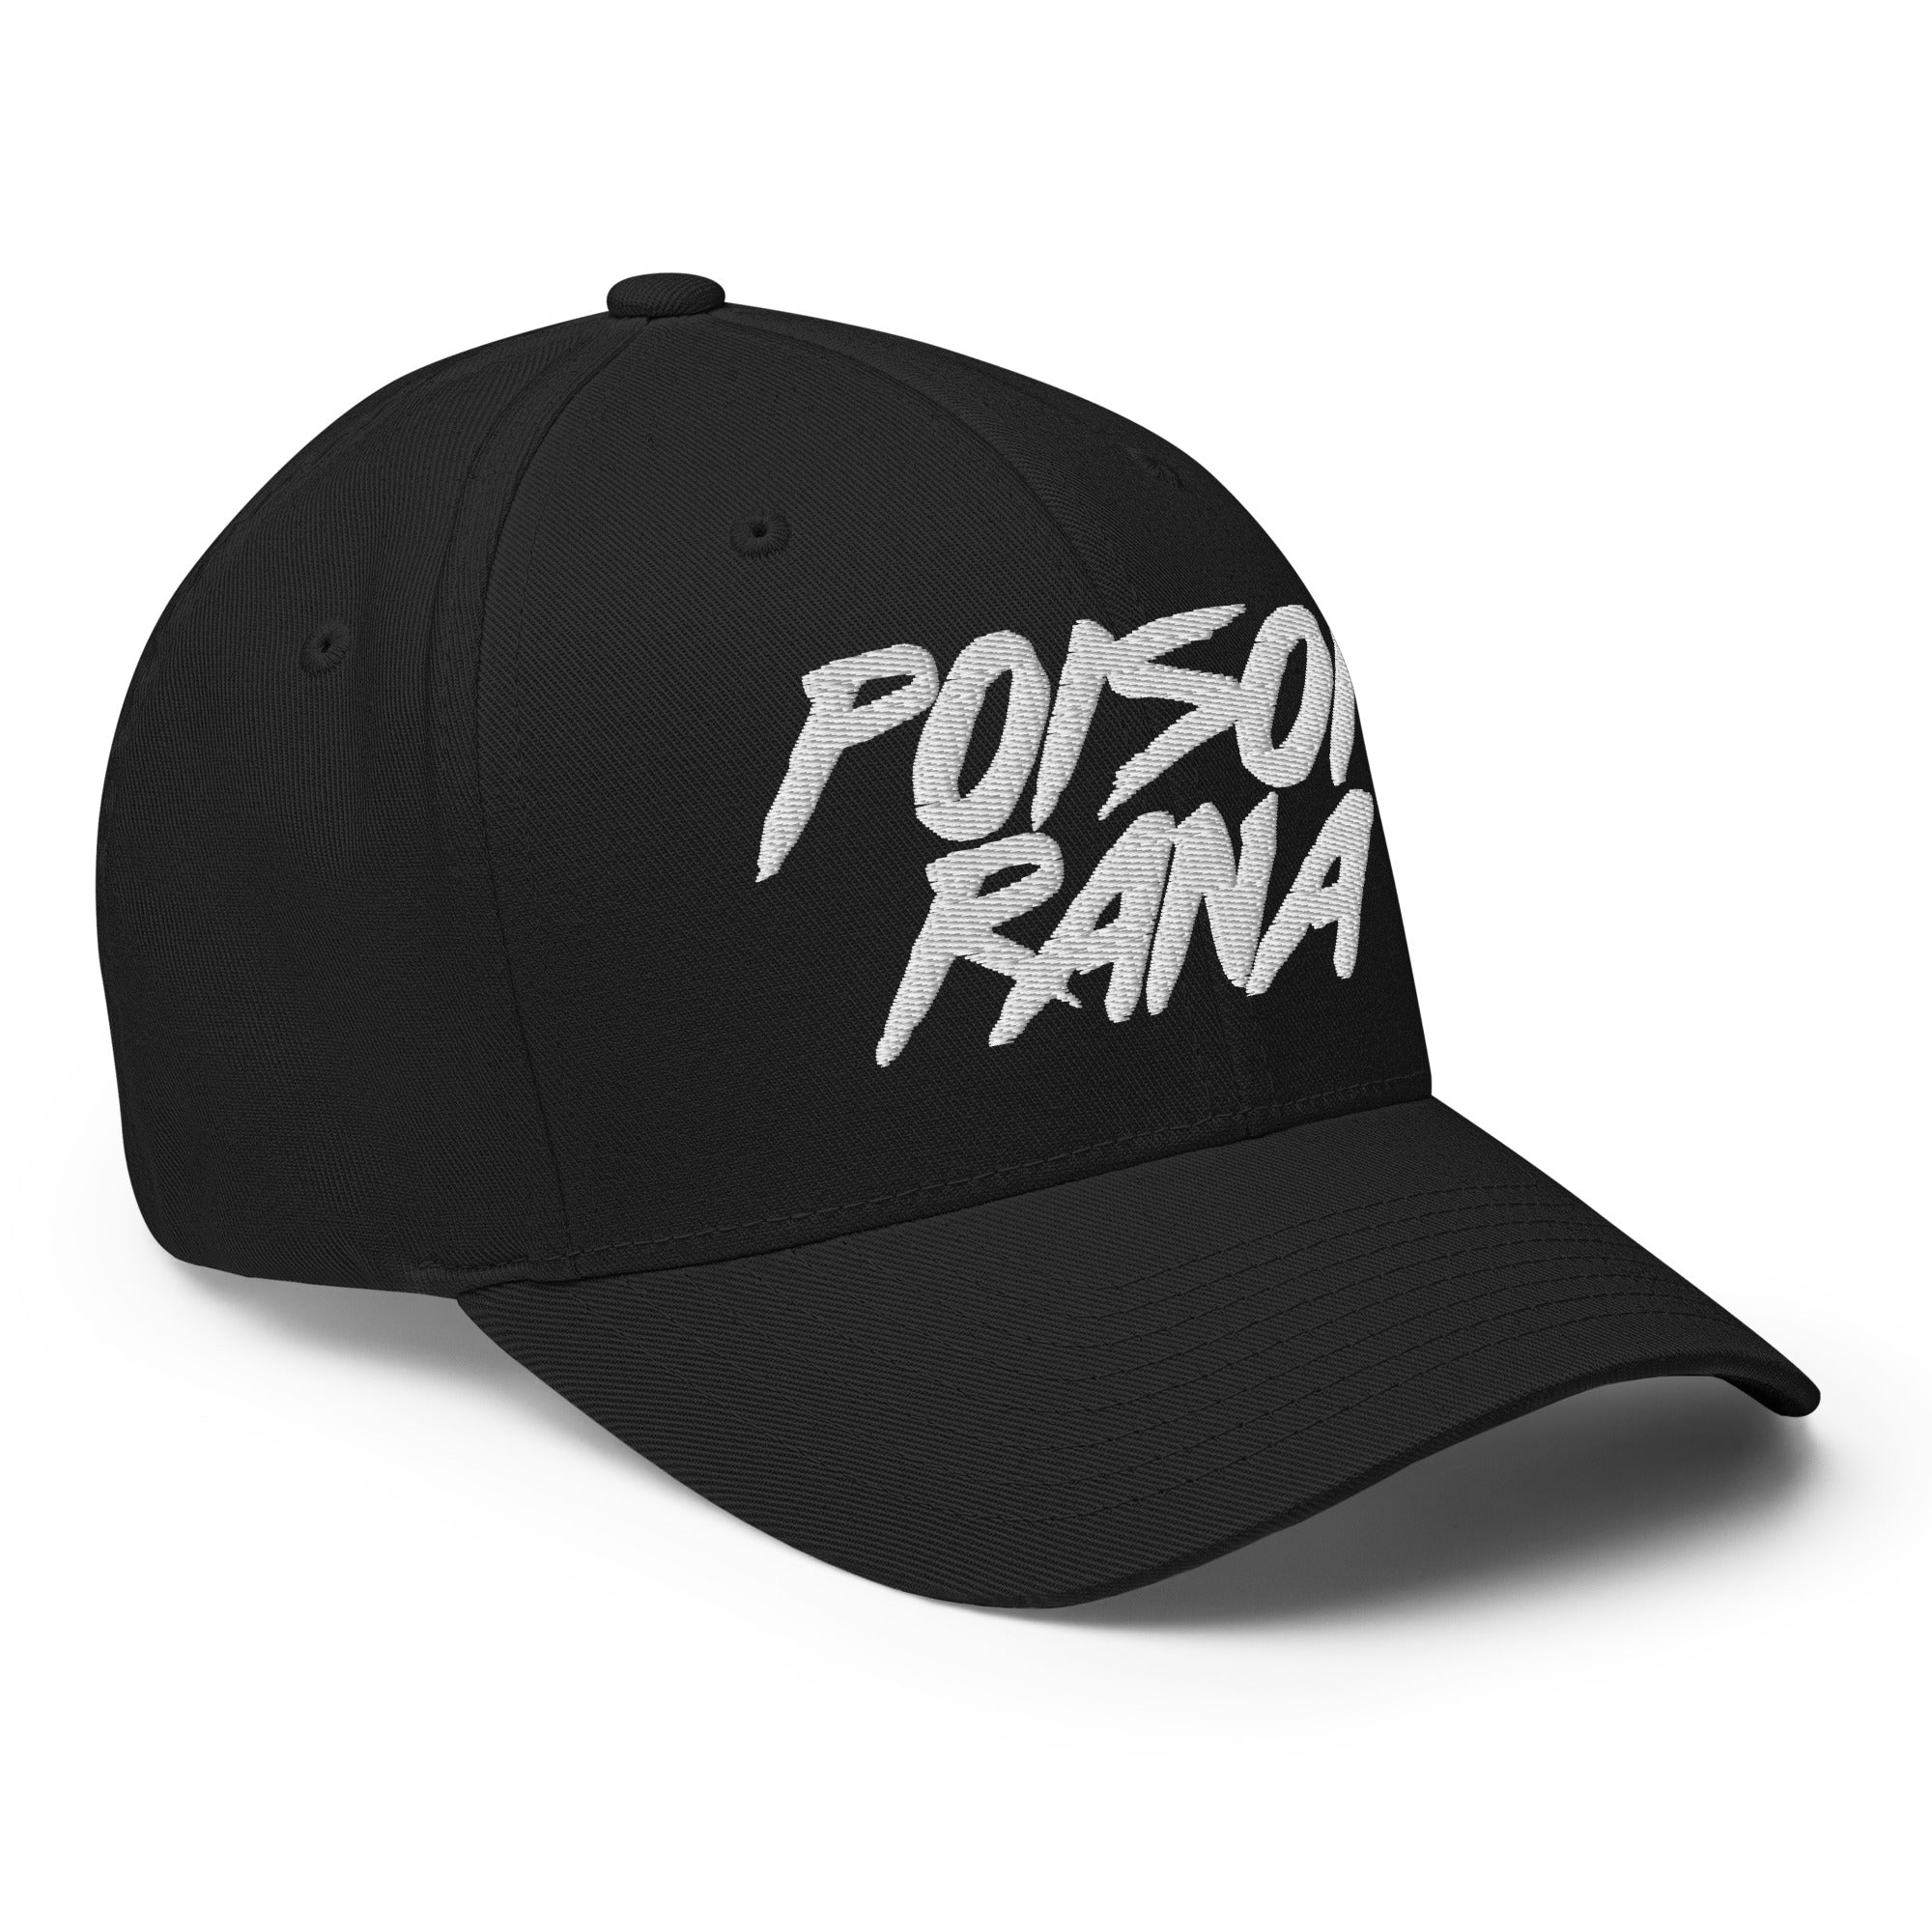 Poisonrana Black Flexfit Cap